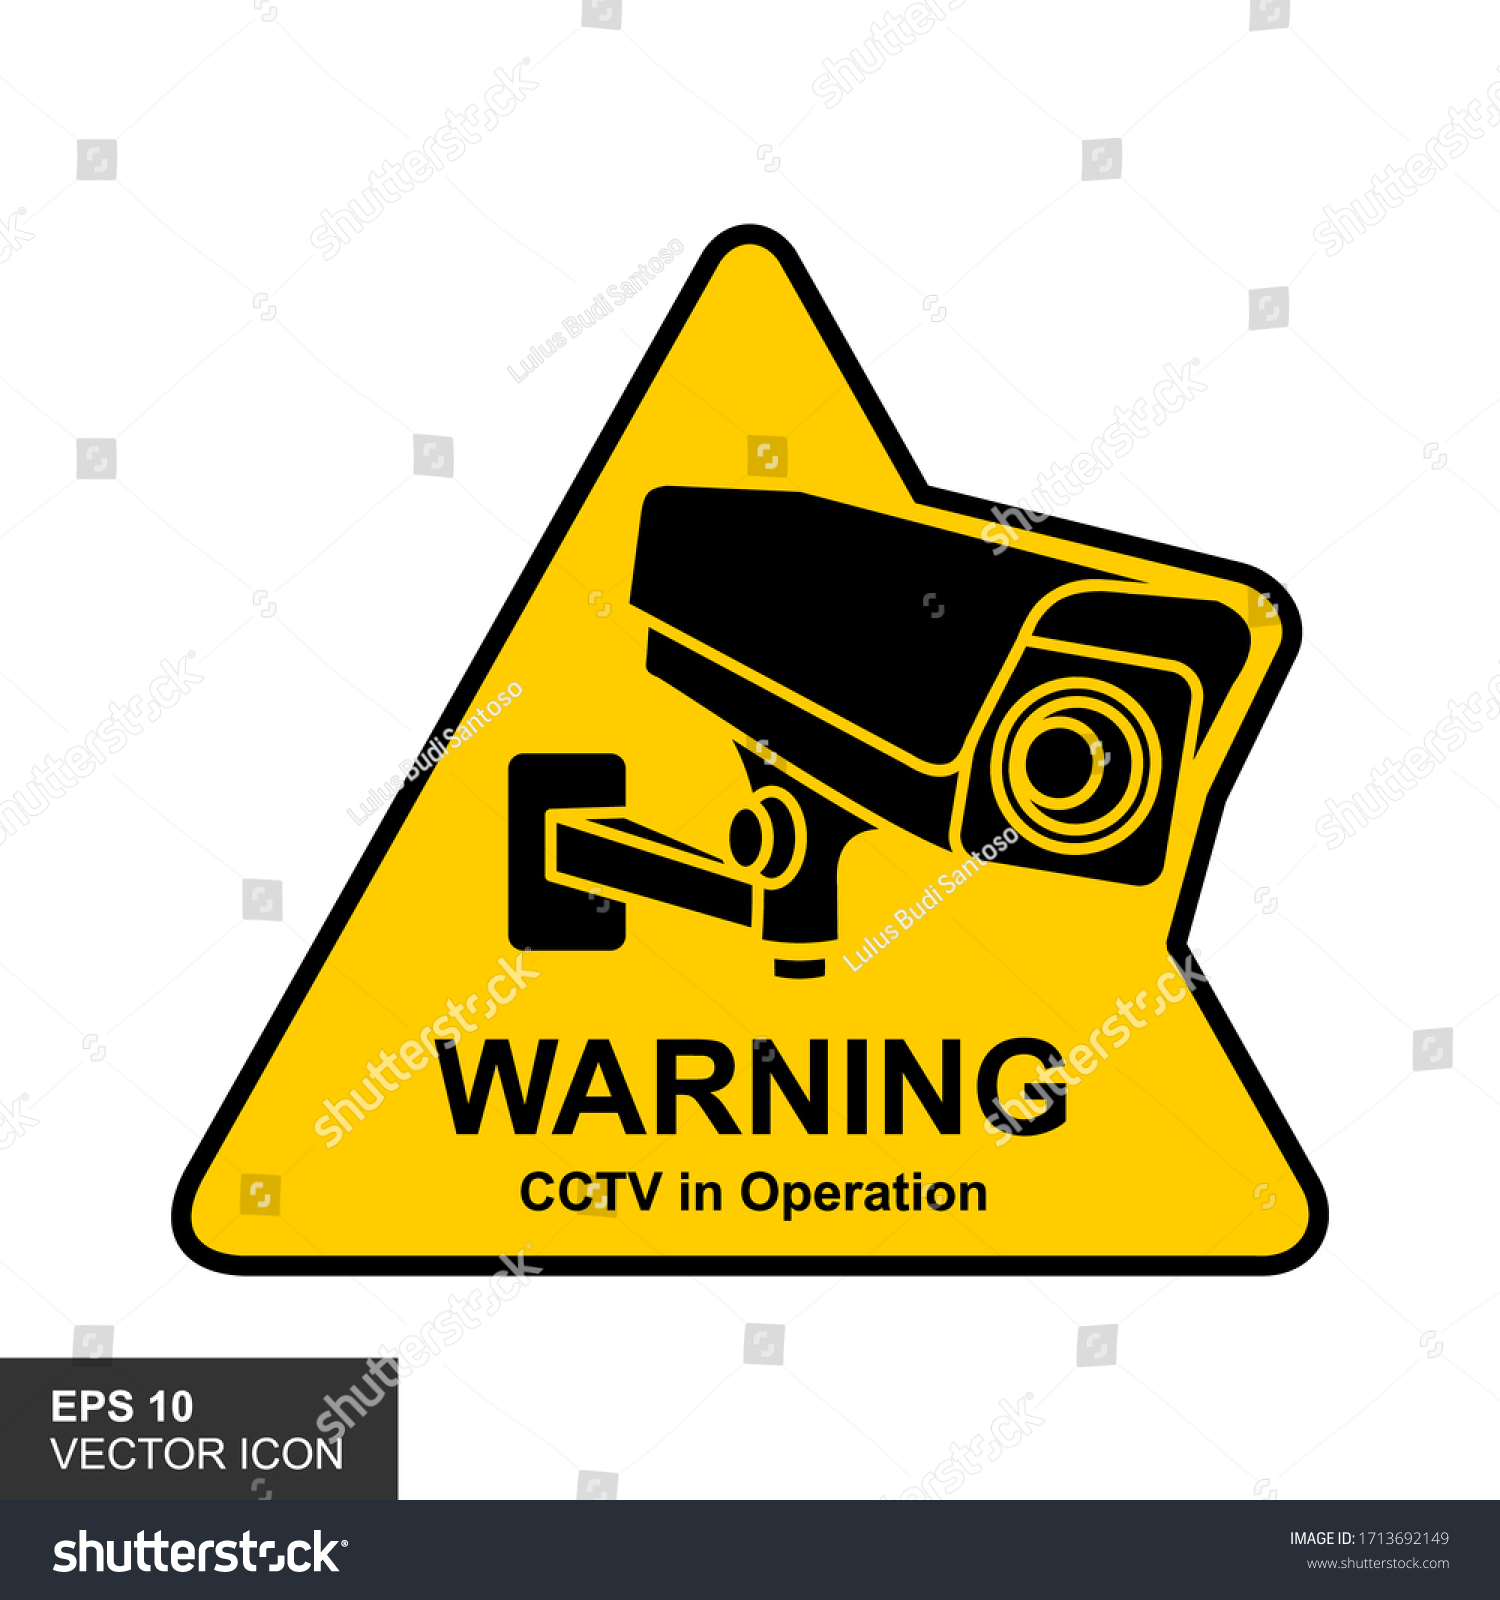 CCTV VIDEO SURVEILLANCE STICKER  House Security Camera Alarm Warning Decal 2x3"